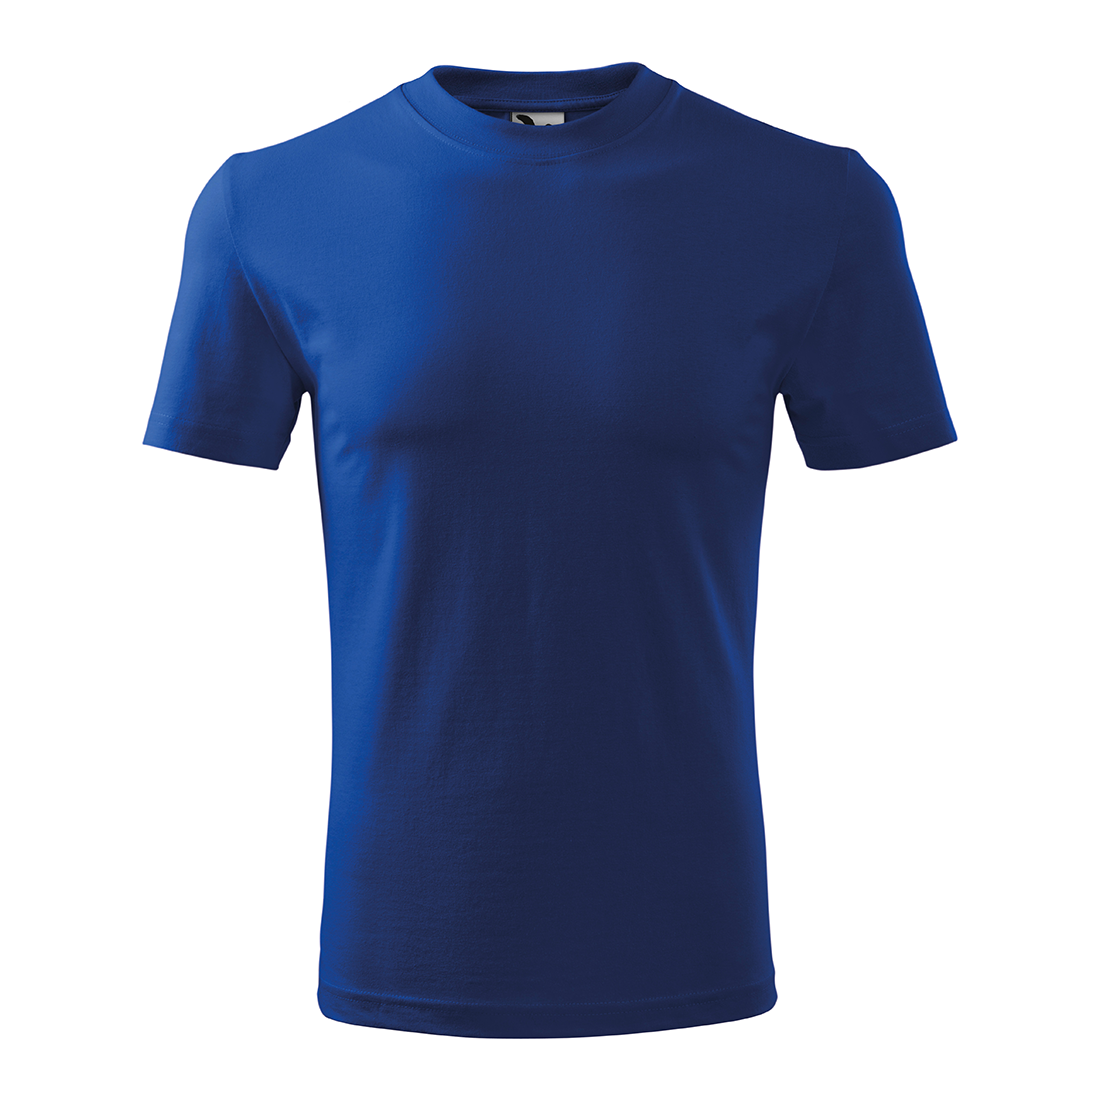 Unisex classic T-shirt - Safetywear